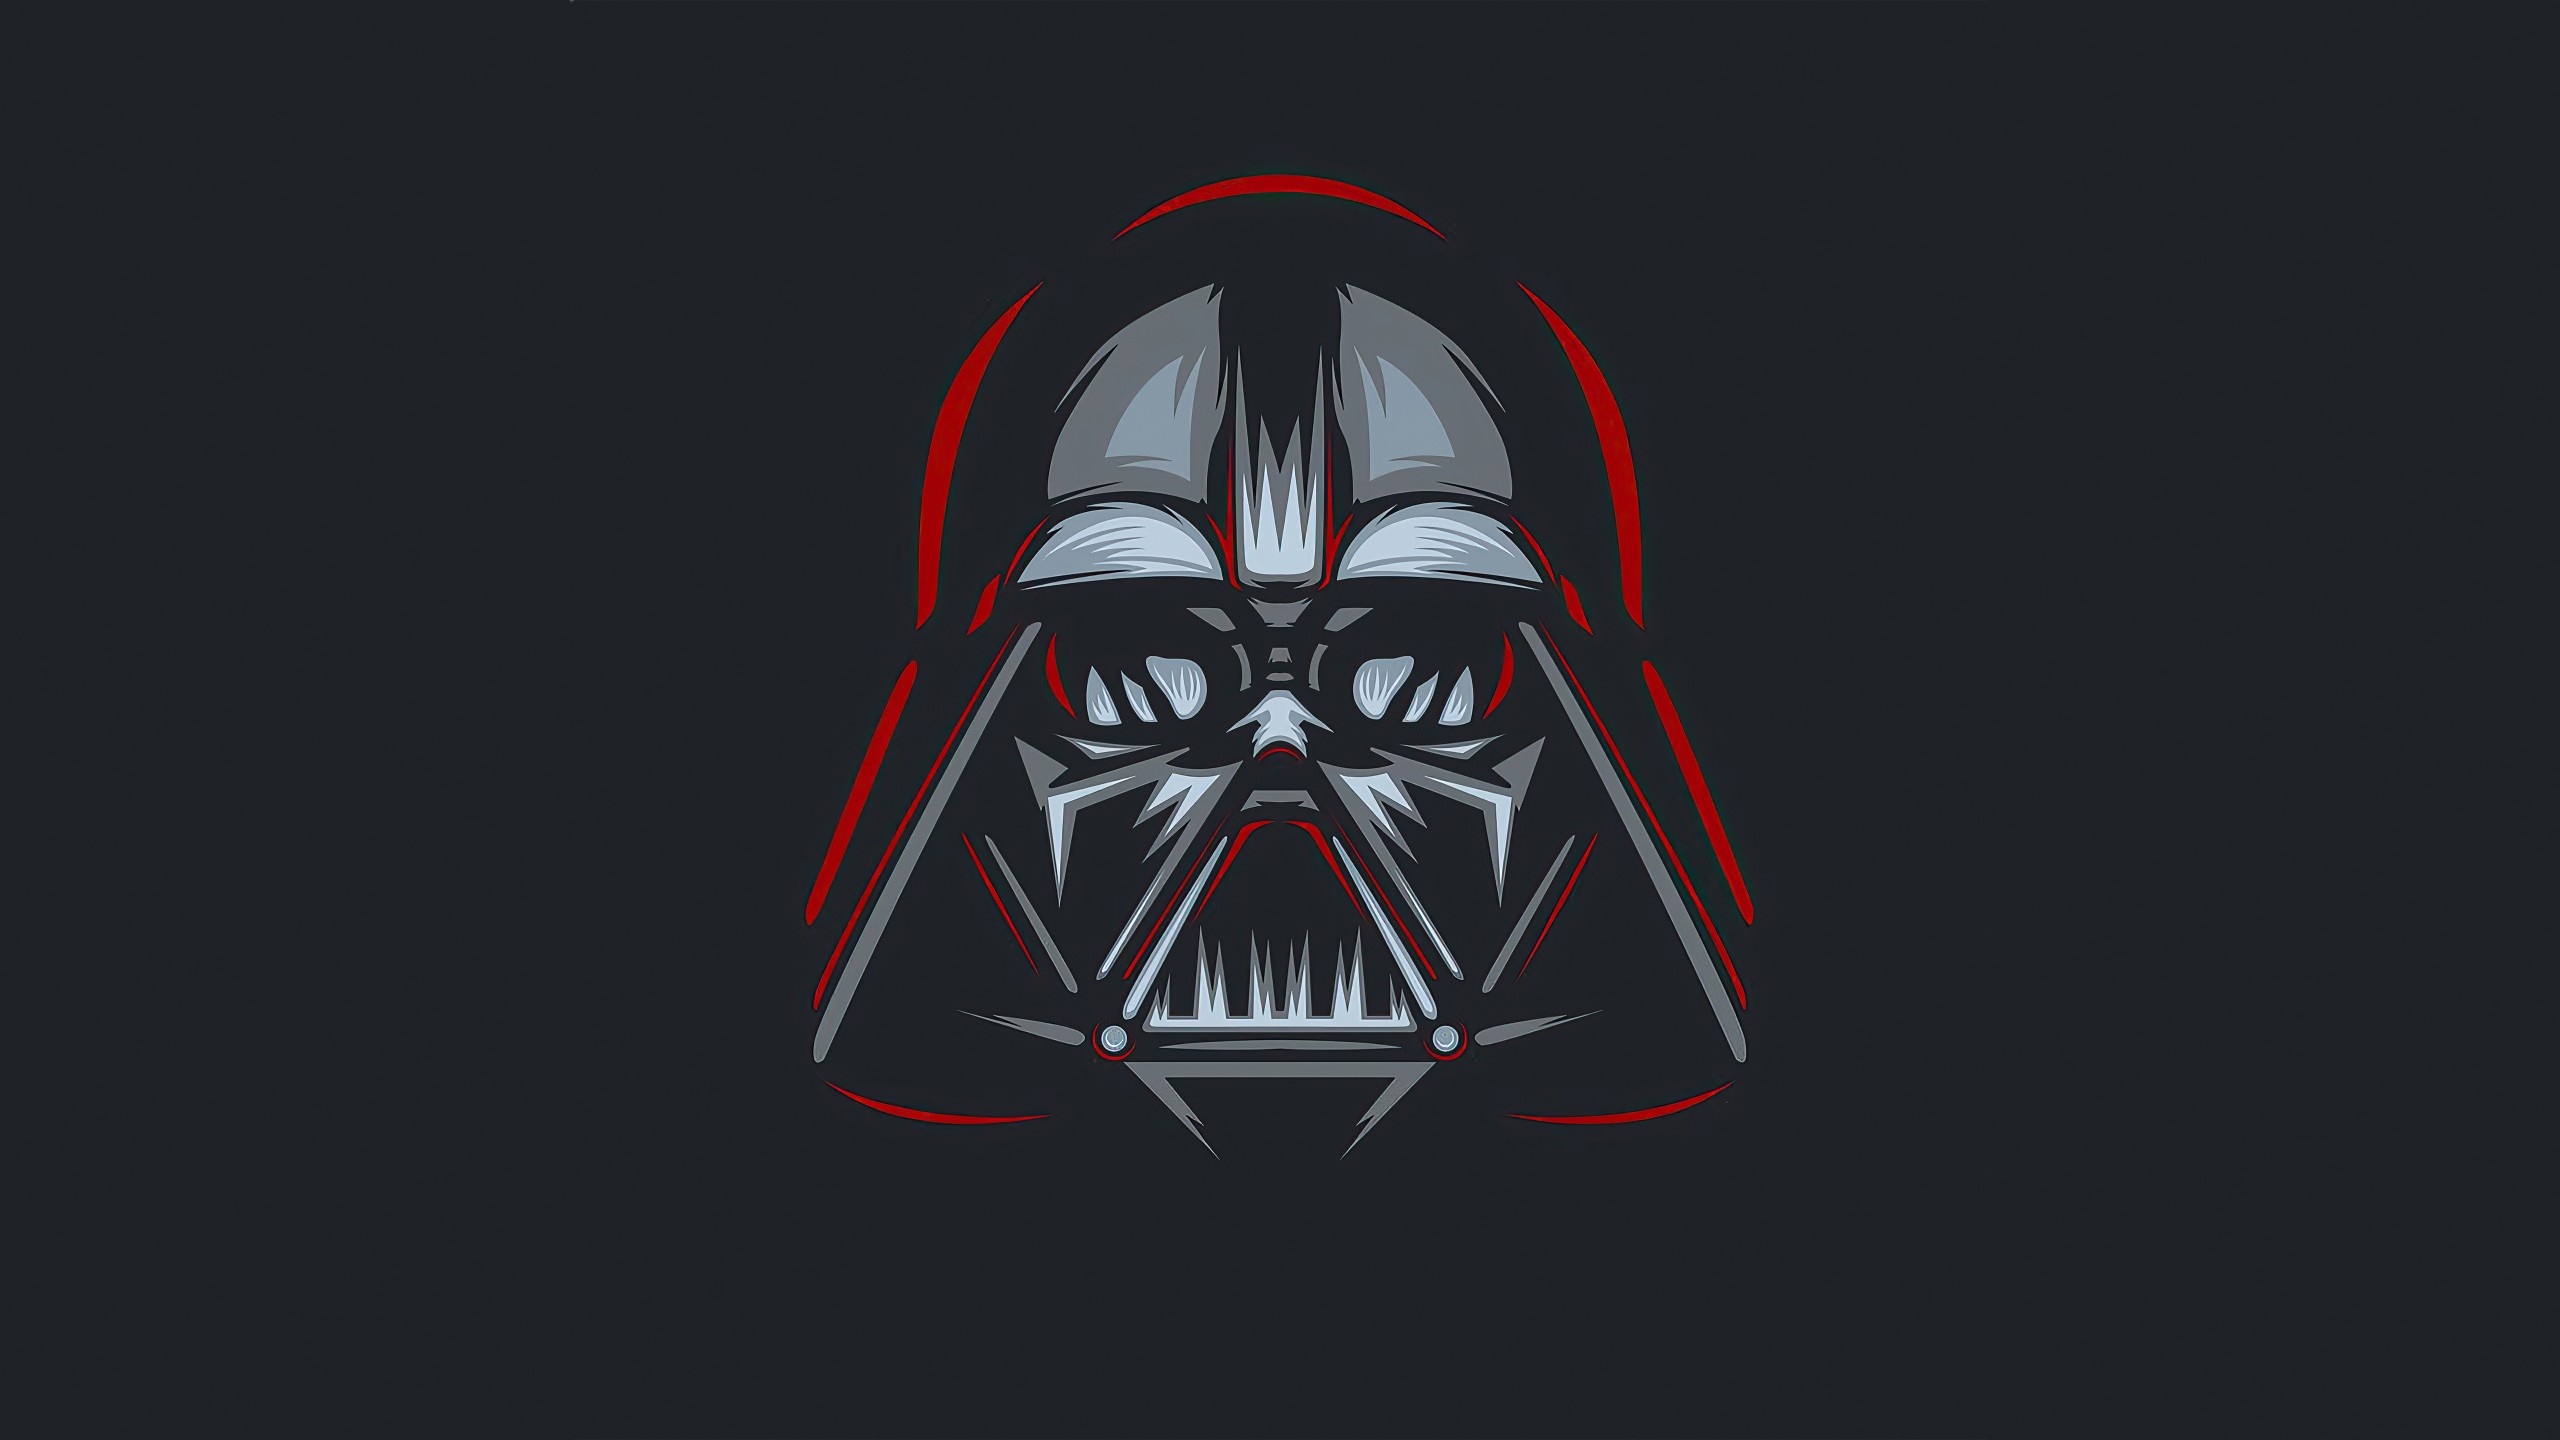 Darth Vader: Jake Lloyd played Anakin Skywalker as a child in The Phantom Menace. 2560x1440 HD Wallpaper.